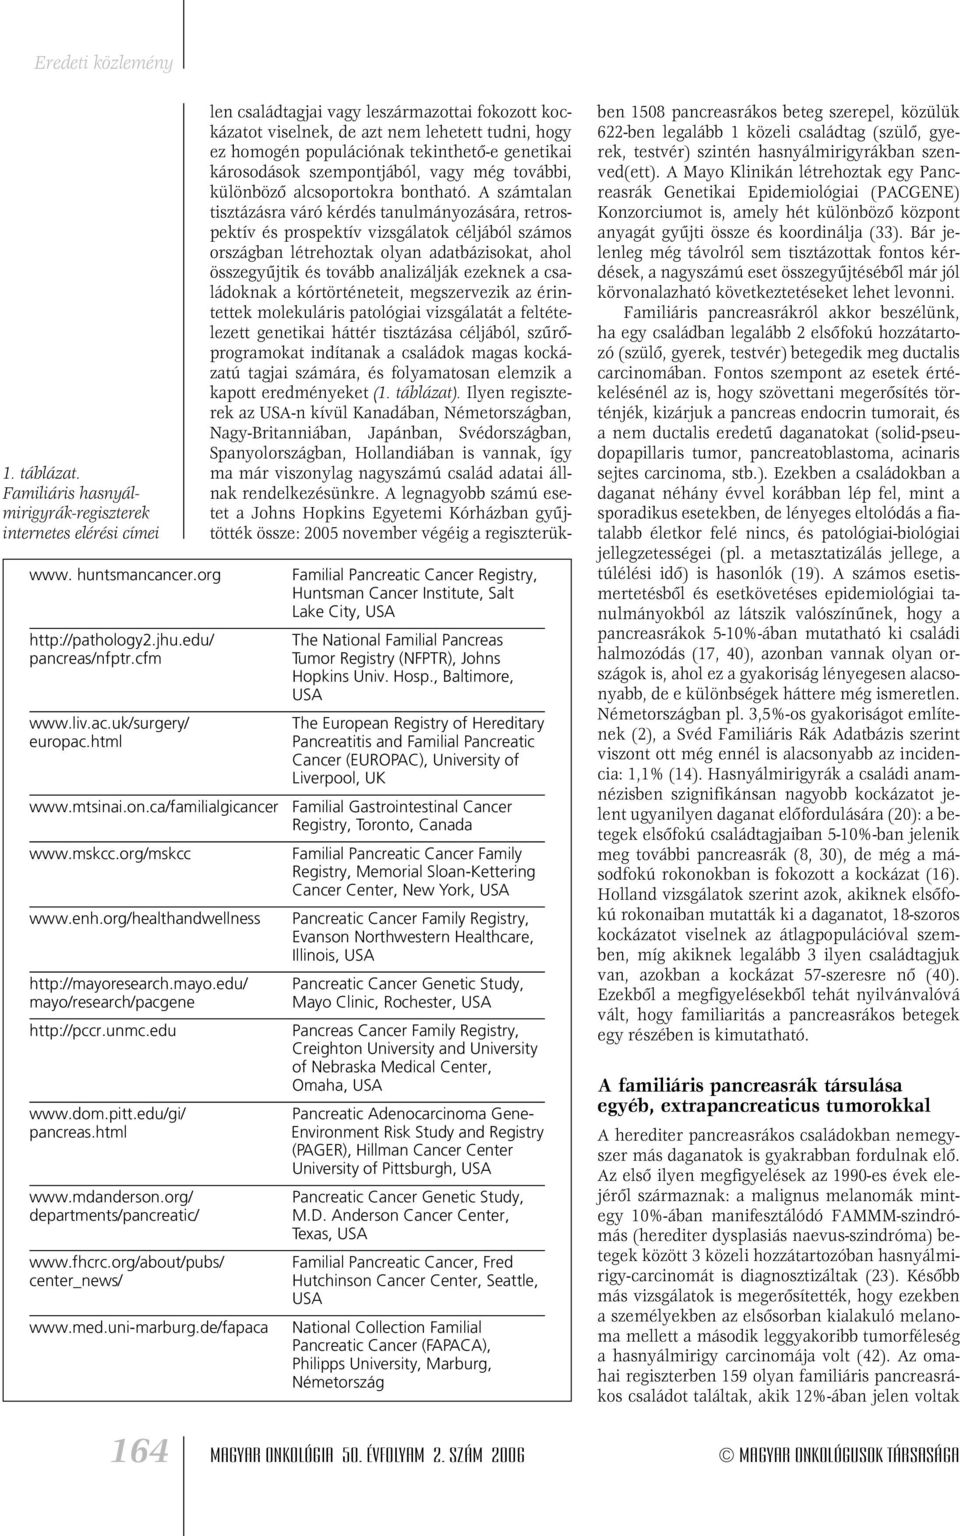 edu Pancreatic Adenocarcinoma Gene- Environment Risk Study and Registry (PAGER), Hillman Cancer Center University of Pittsburgh, USA www.dom.pitt.edu/gi/ pancreas.html www.mdanderson.